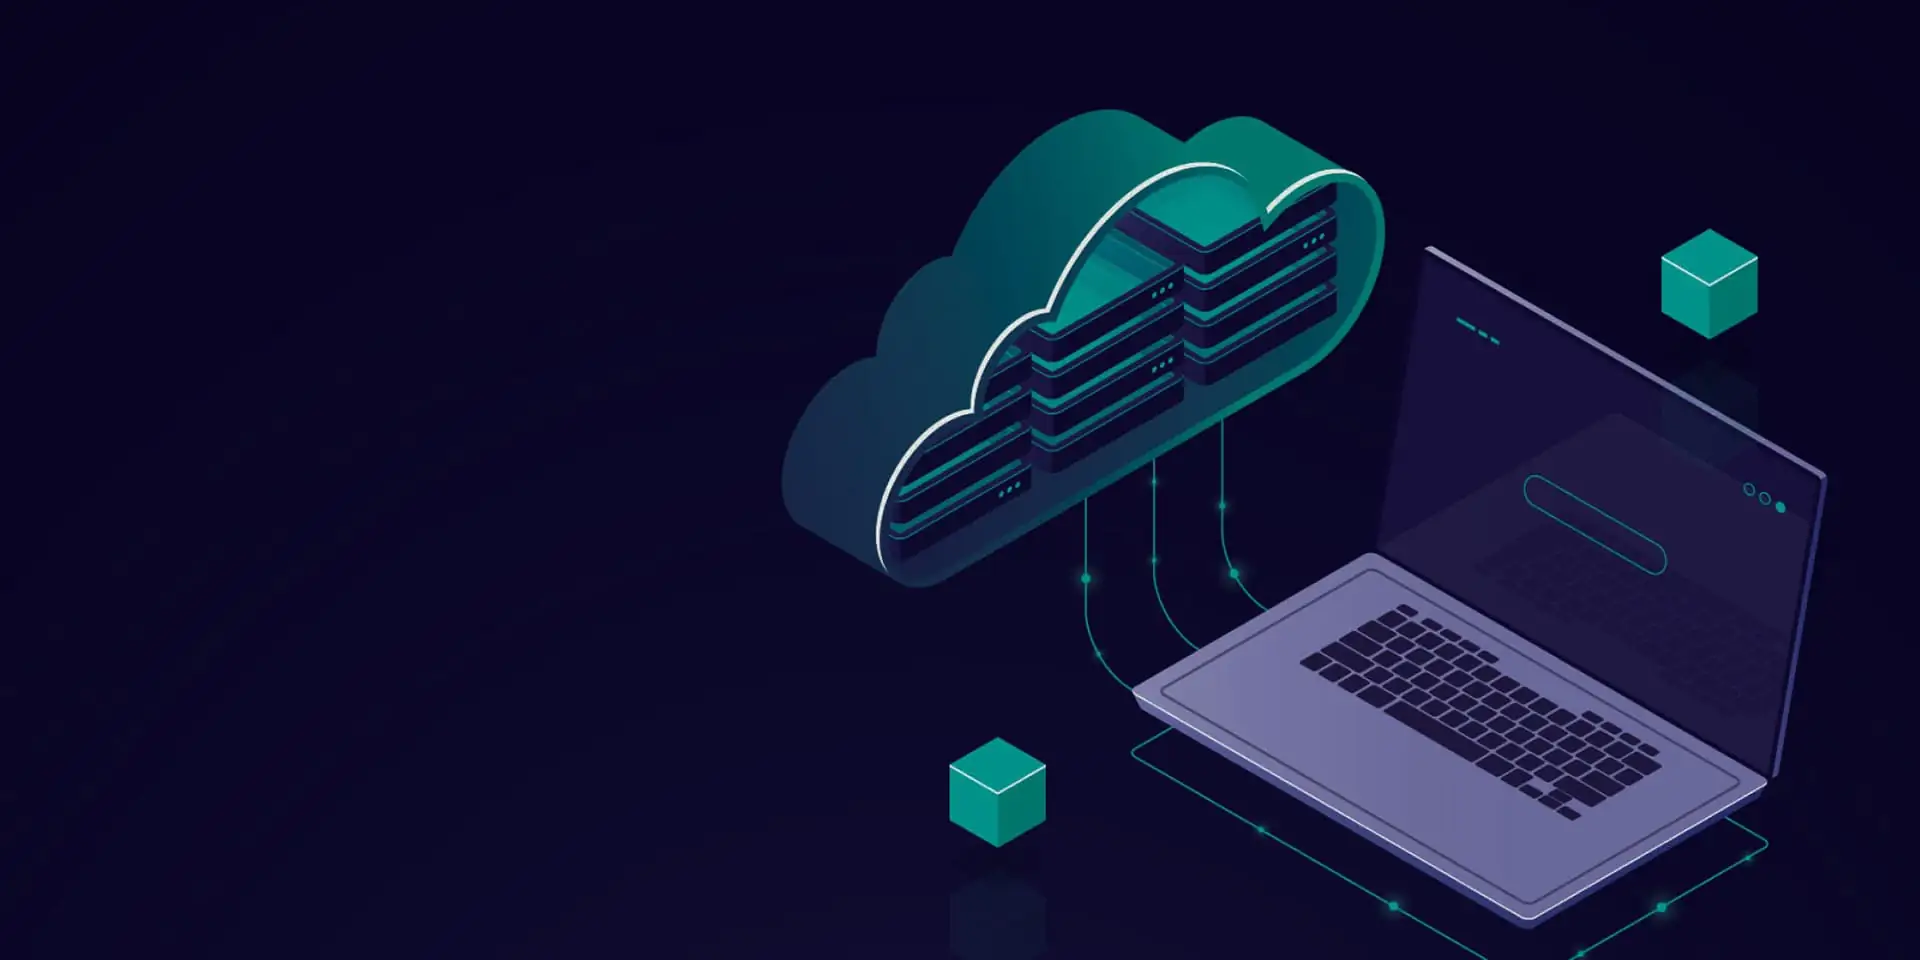 Enterprise workloads on Azure Cloud by azure managed services